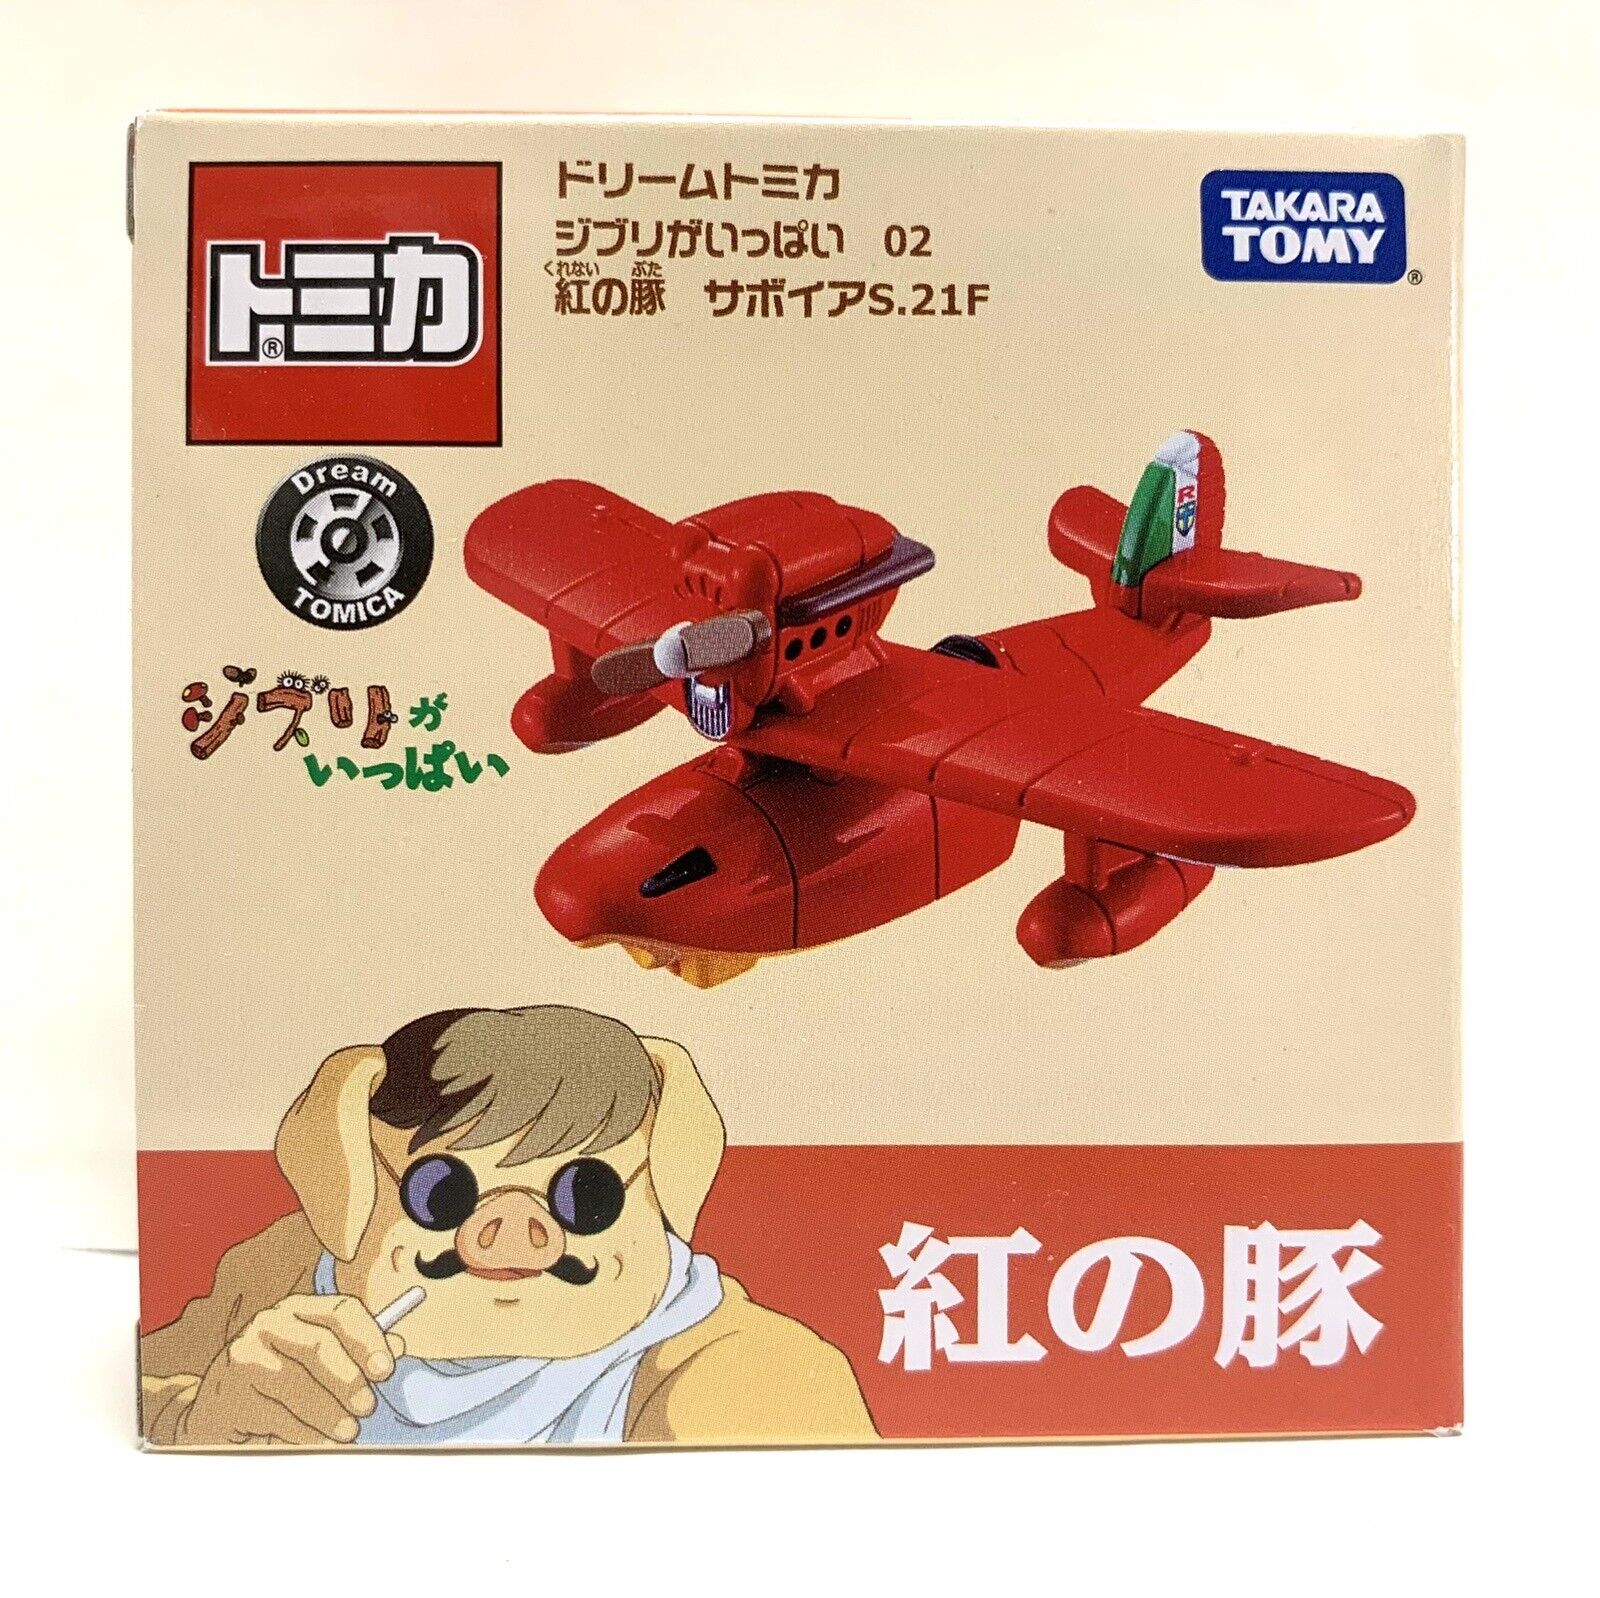 Takara Tomy / Dream Tomica Ghibli 2 Porco Rosso Savoia S.21F